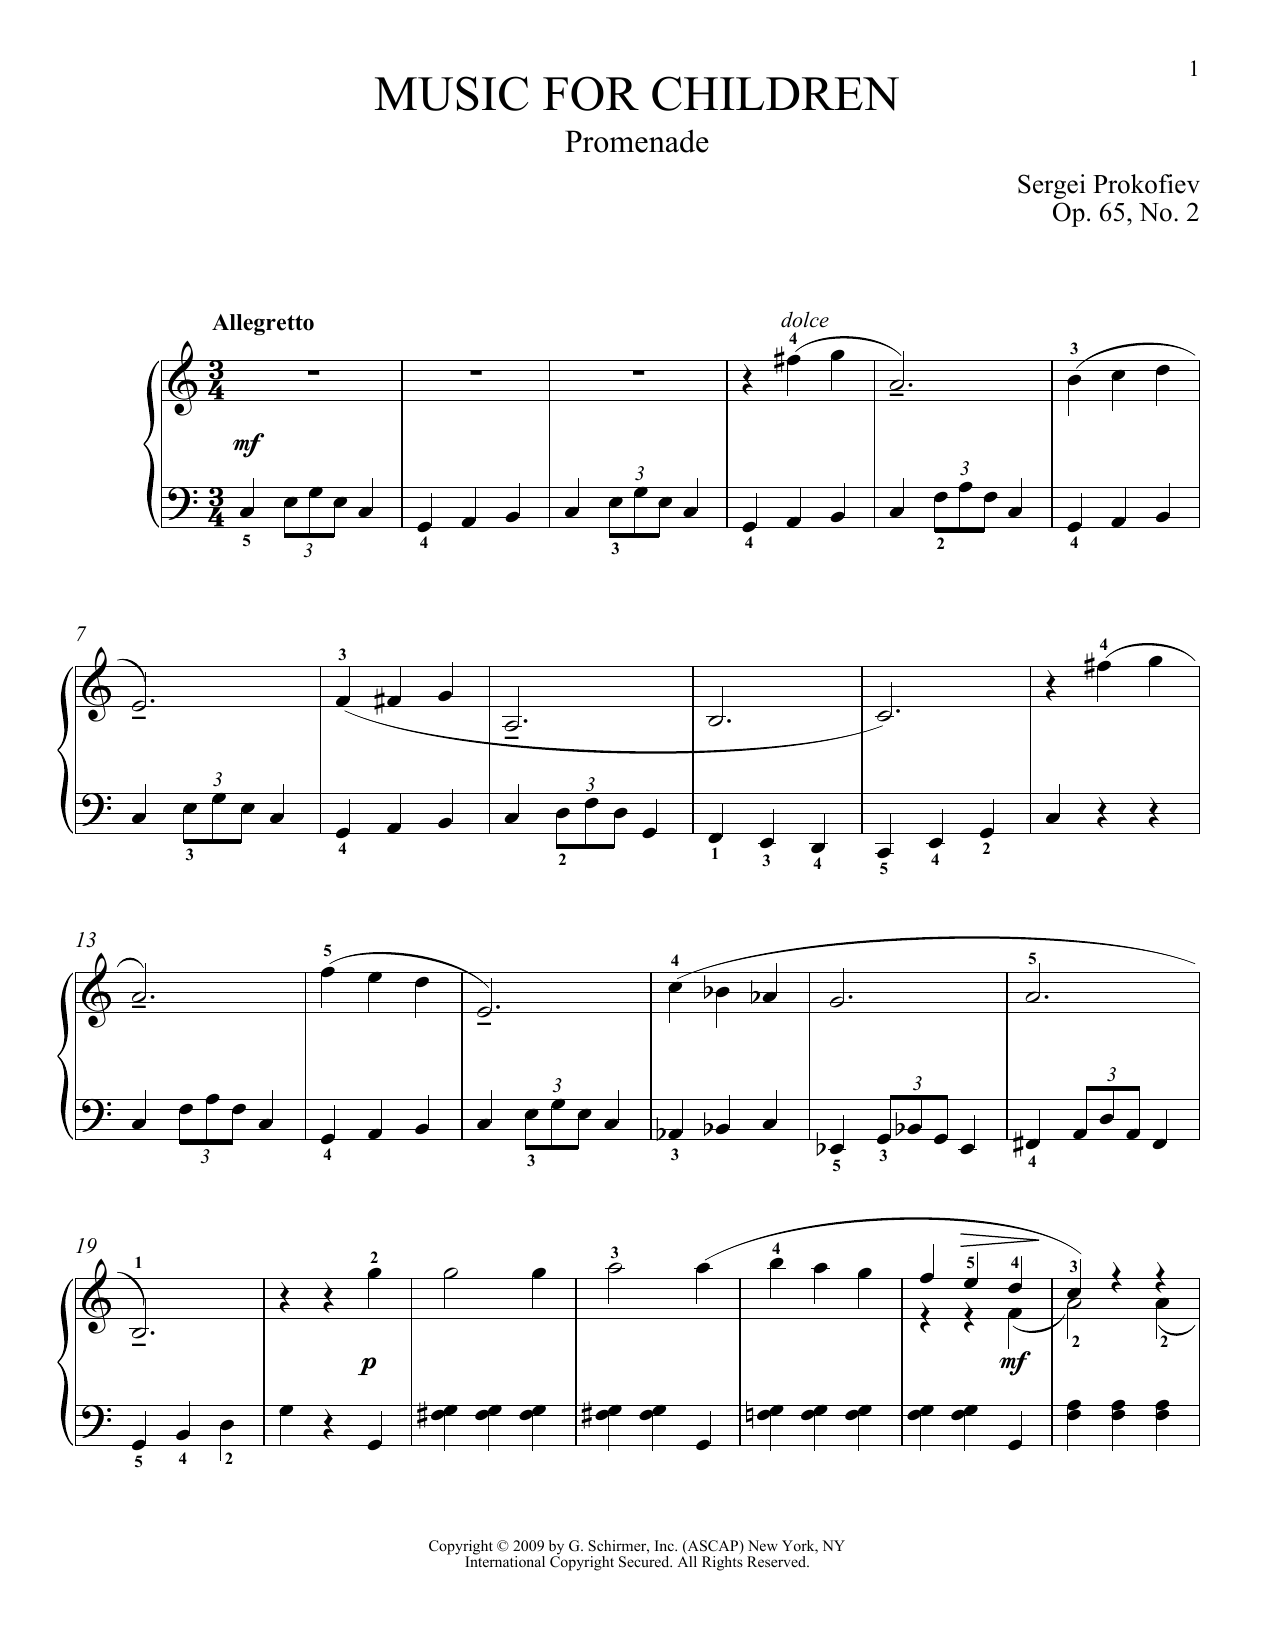 Sergei Prokofiev Promenade Sheet Music Notes & Chords for Piano - Download or Print PDF